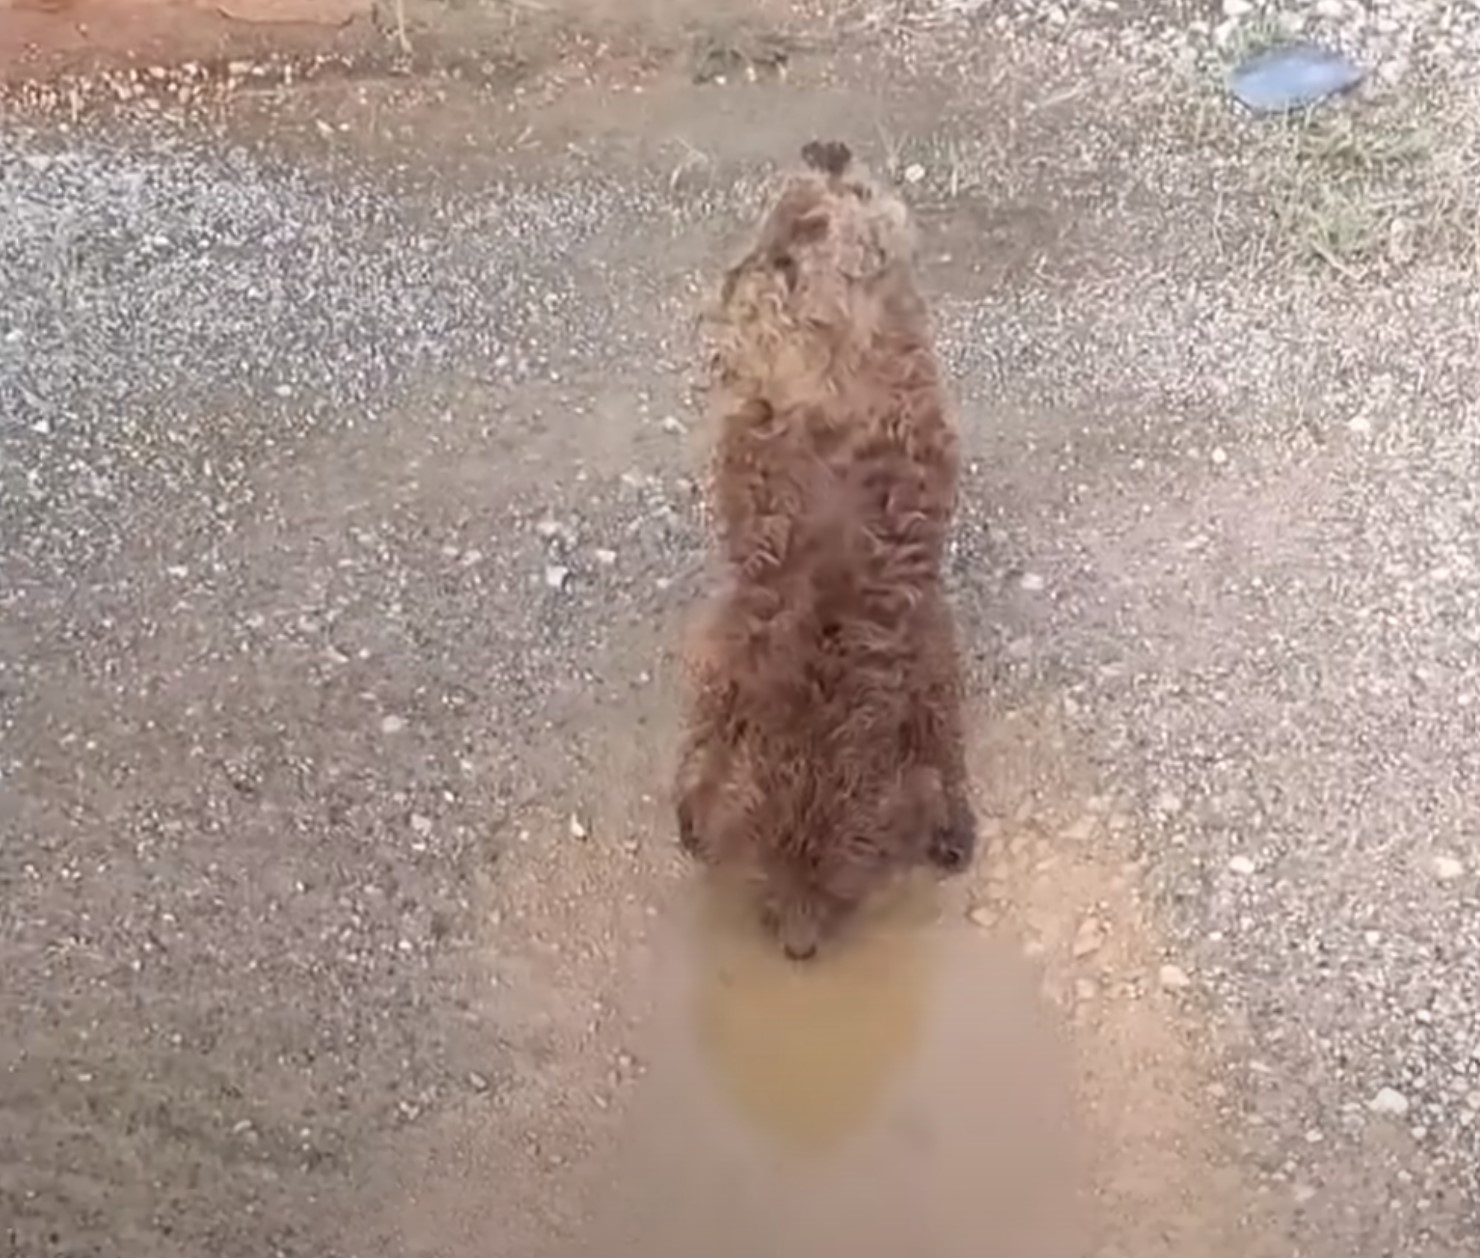 pup drinking rain water